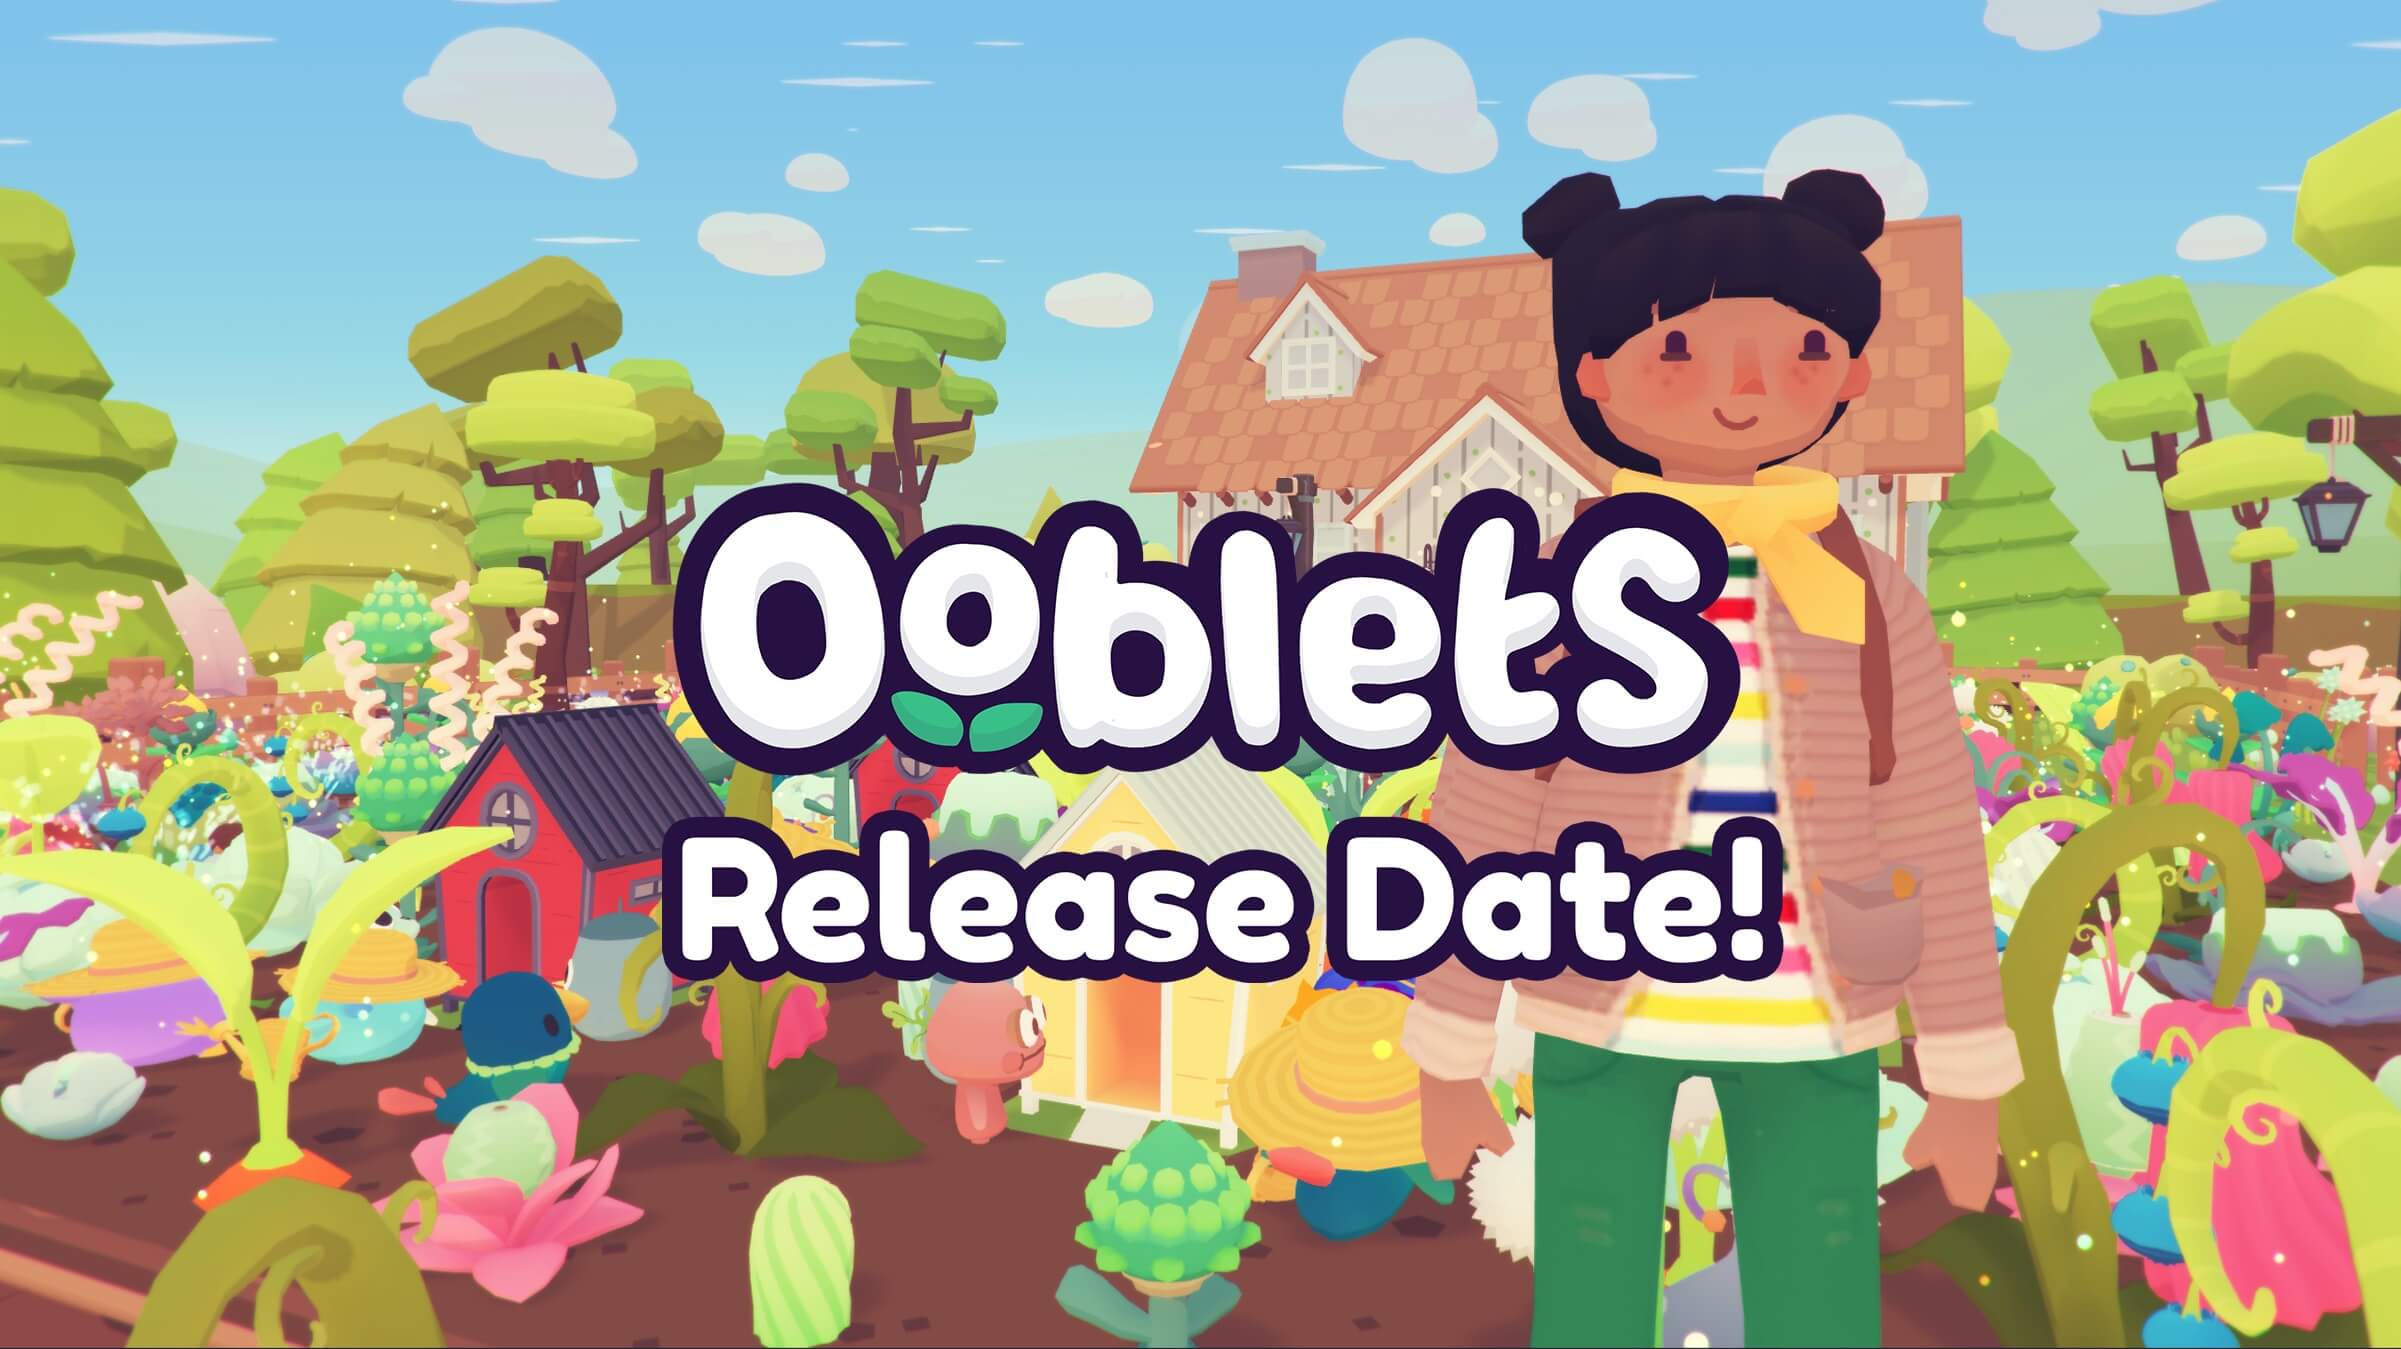 1.0 1st! on releasing Ooblets September